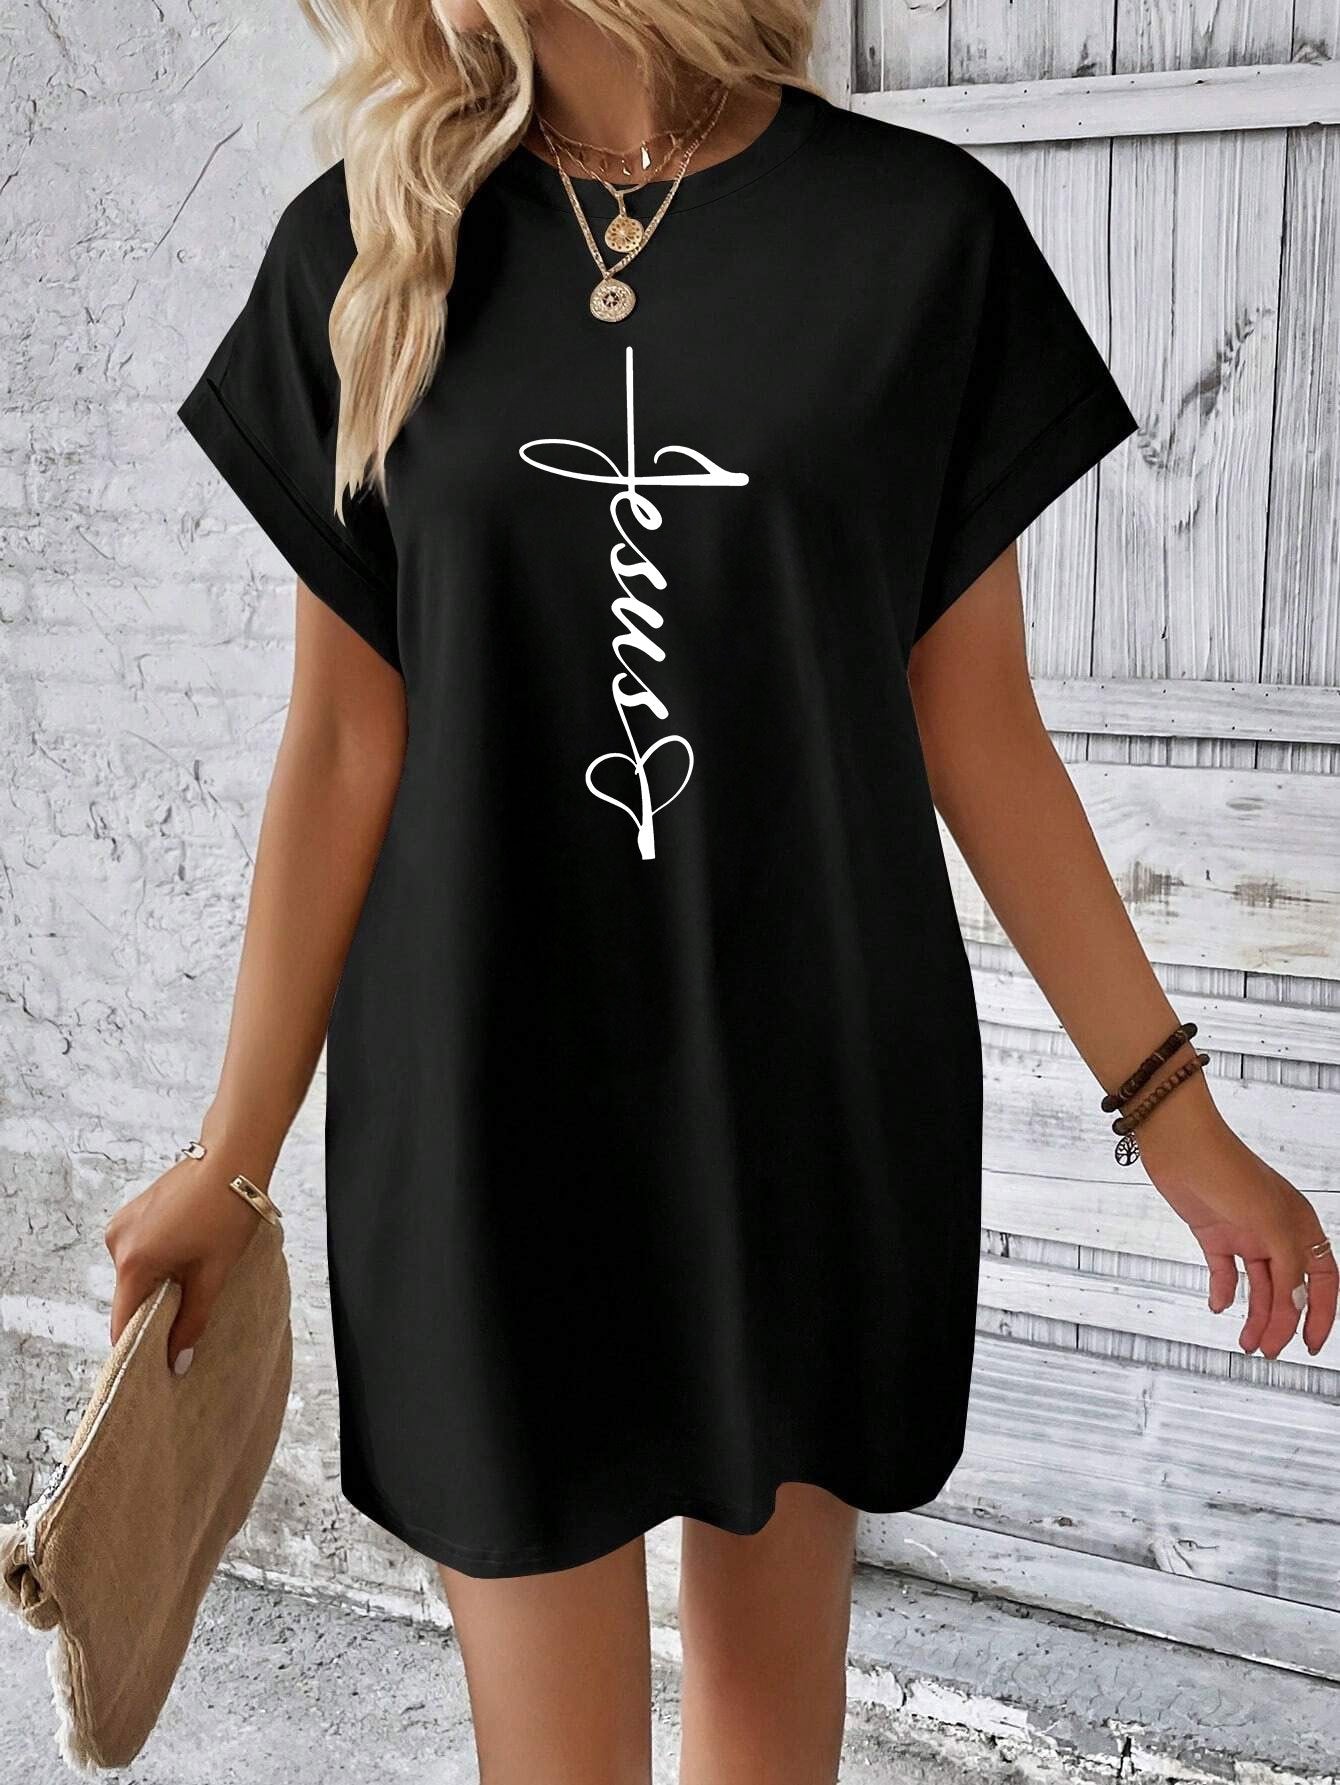 Jesus Women's Christian T-shirt Casual Dresses claimedbygoddesigns